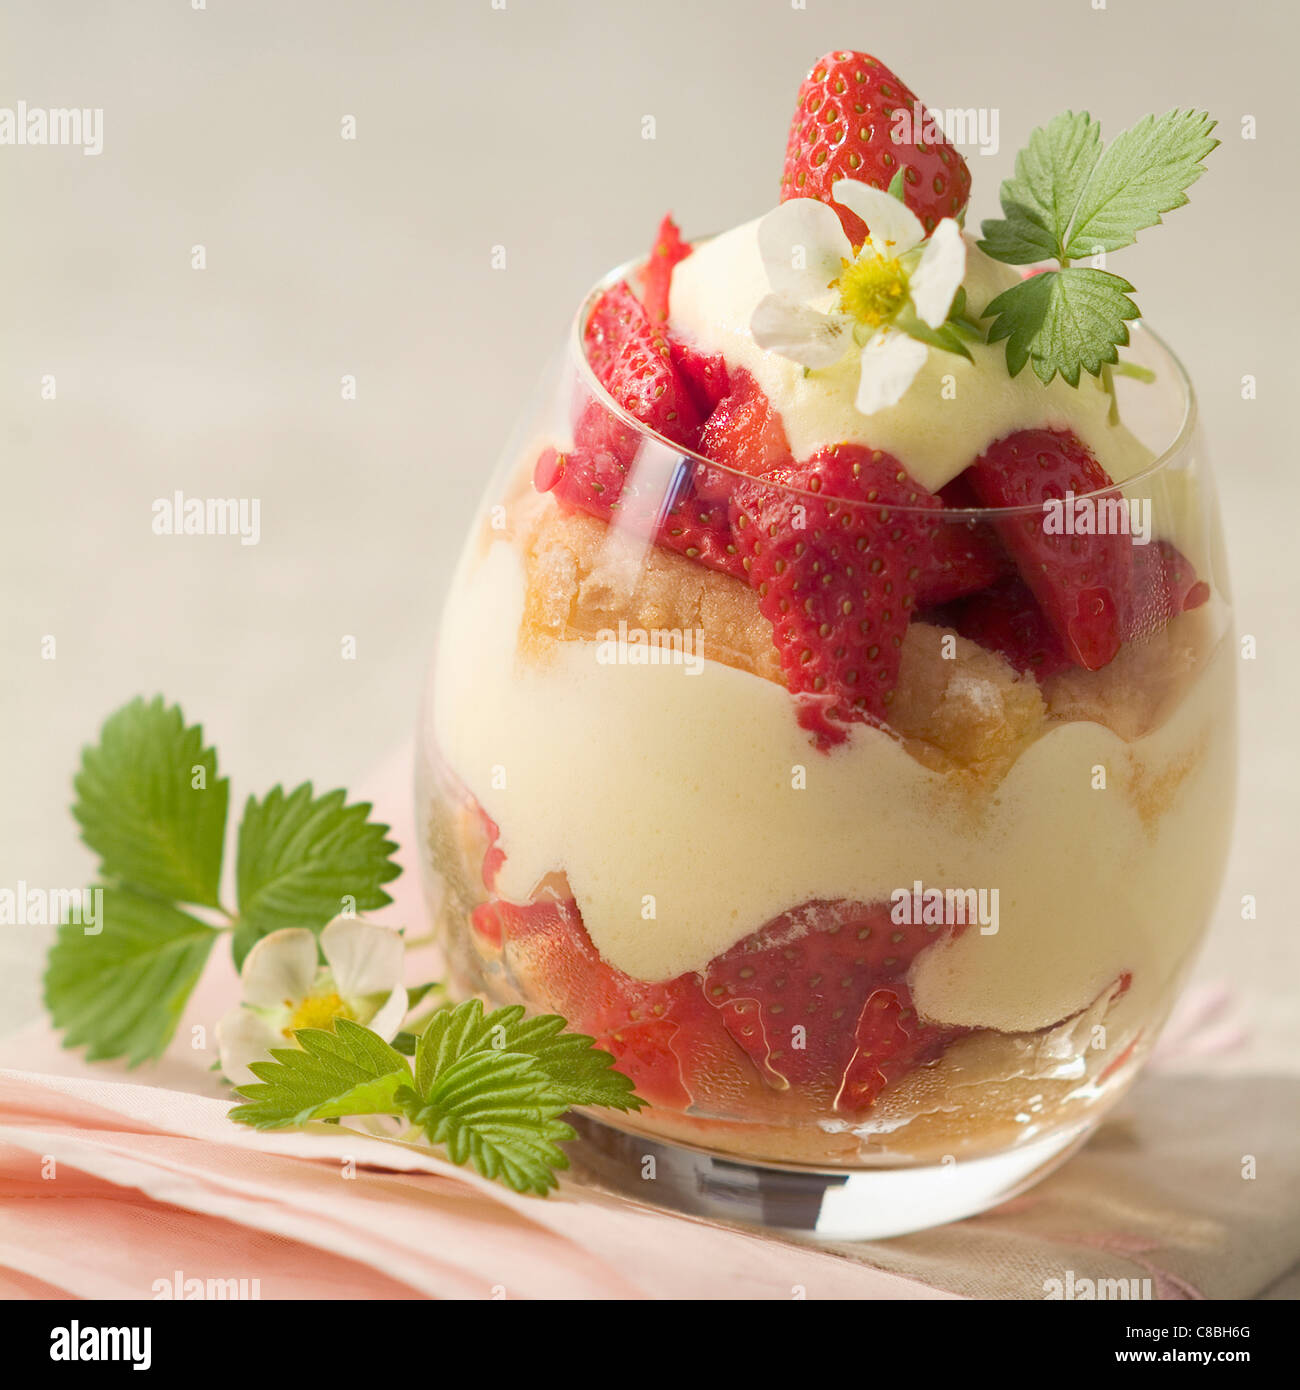 Plougastel Erdbeer-tiramisu Stockfoto